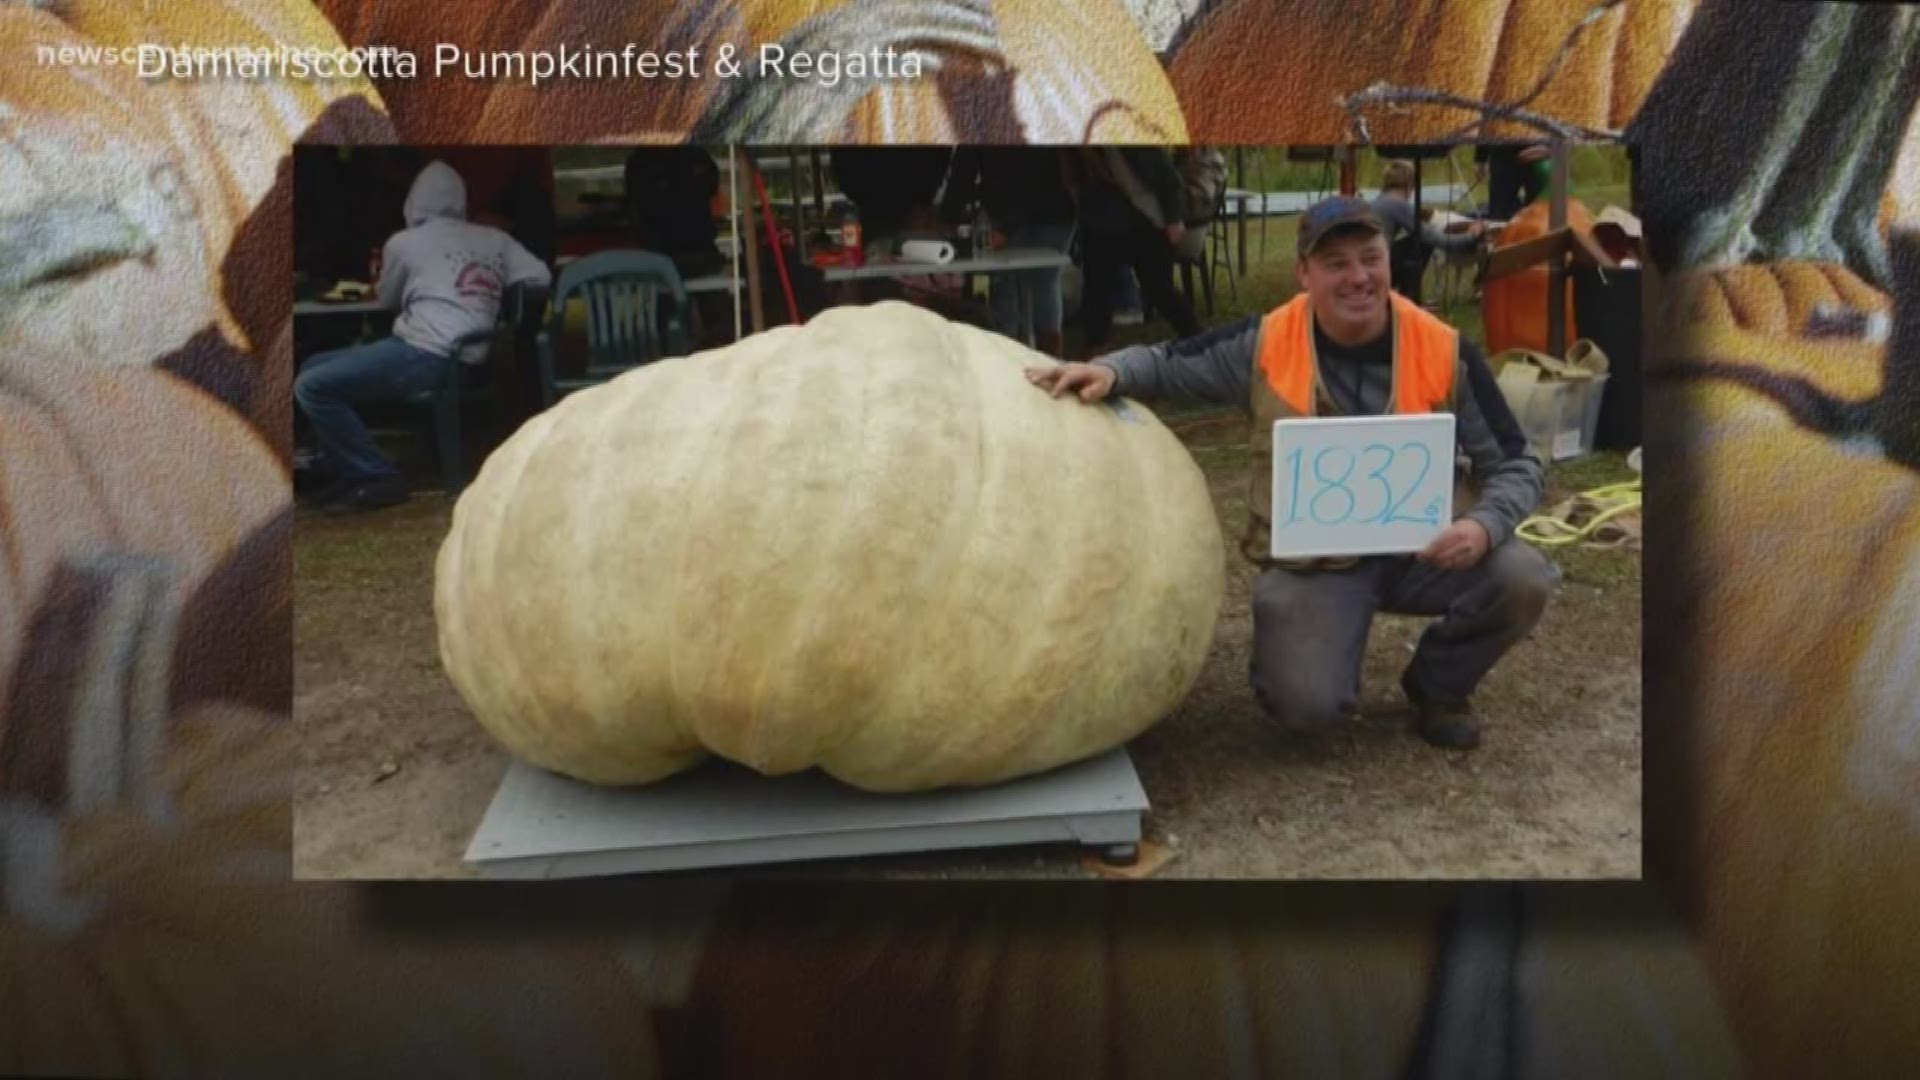 Here's the winner of the annual Damariscotta Pumpkinfest "Biggest pumpkin" contest... His name is Edwin Pierpoint of Jefferson.